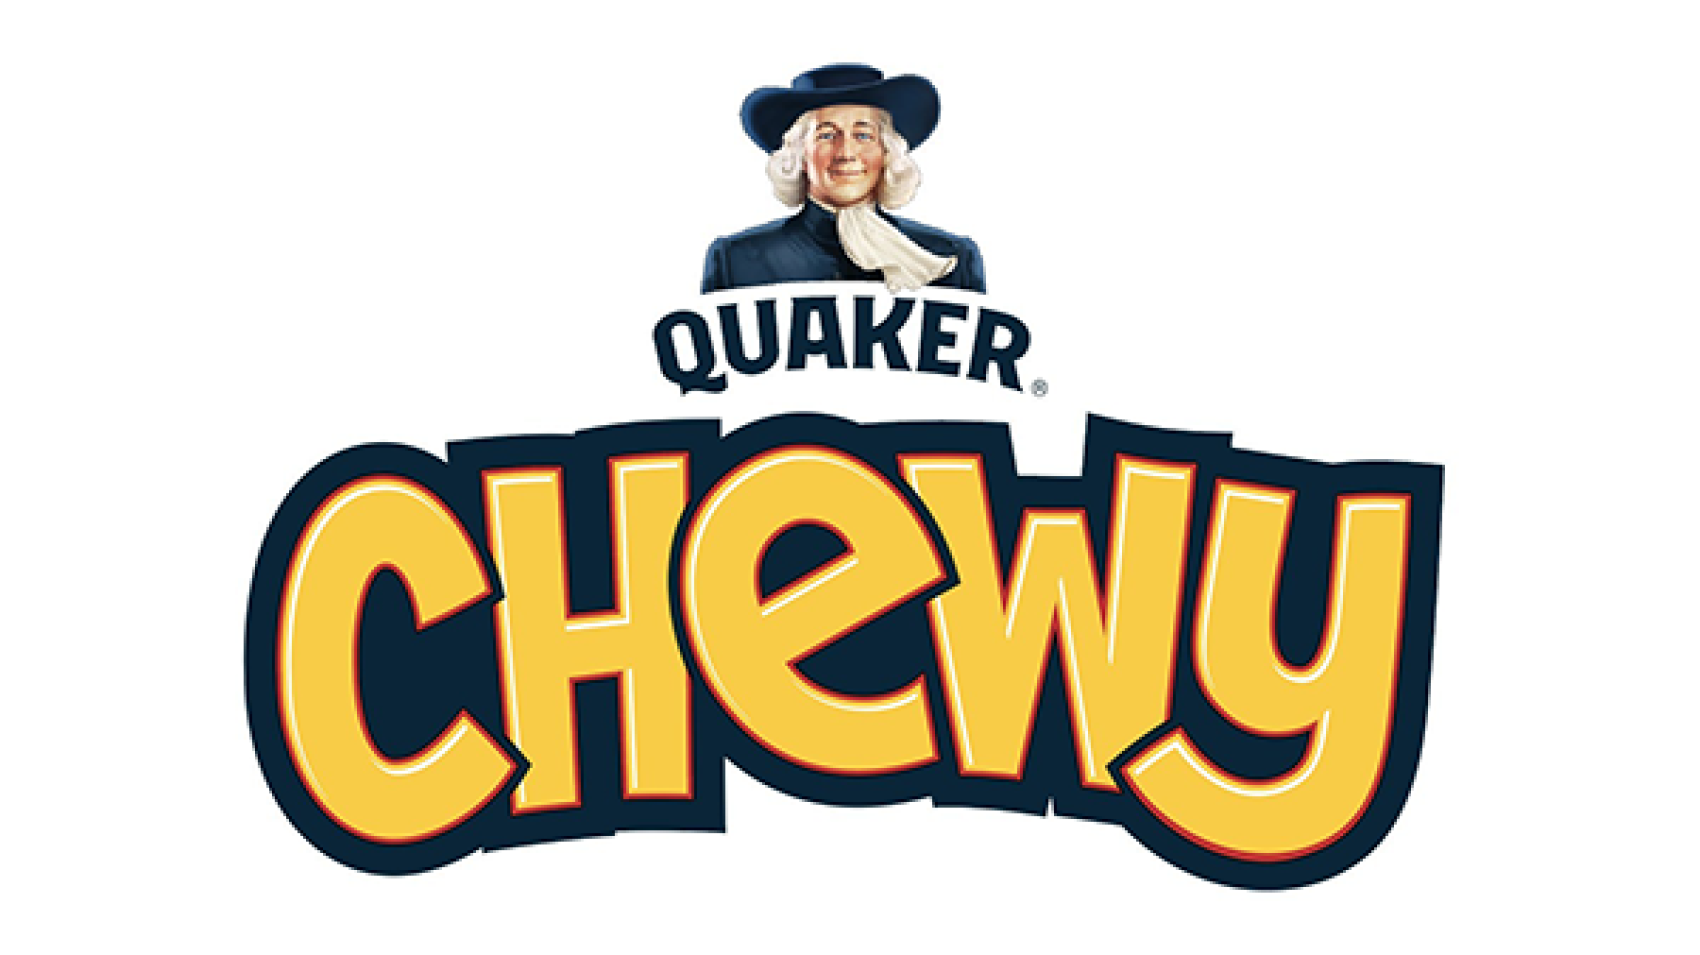 Quaker Chewy logo